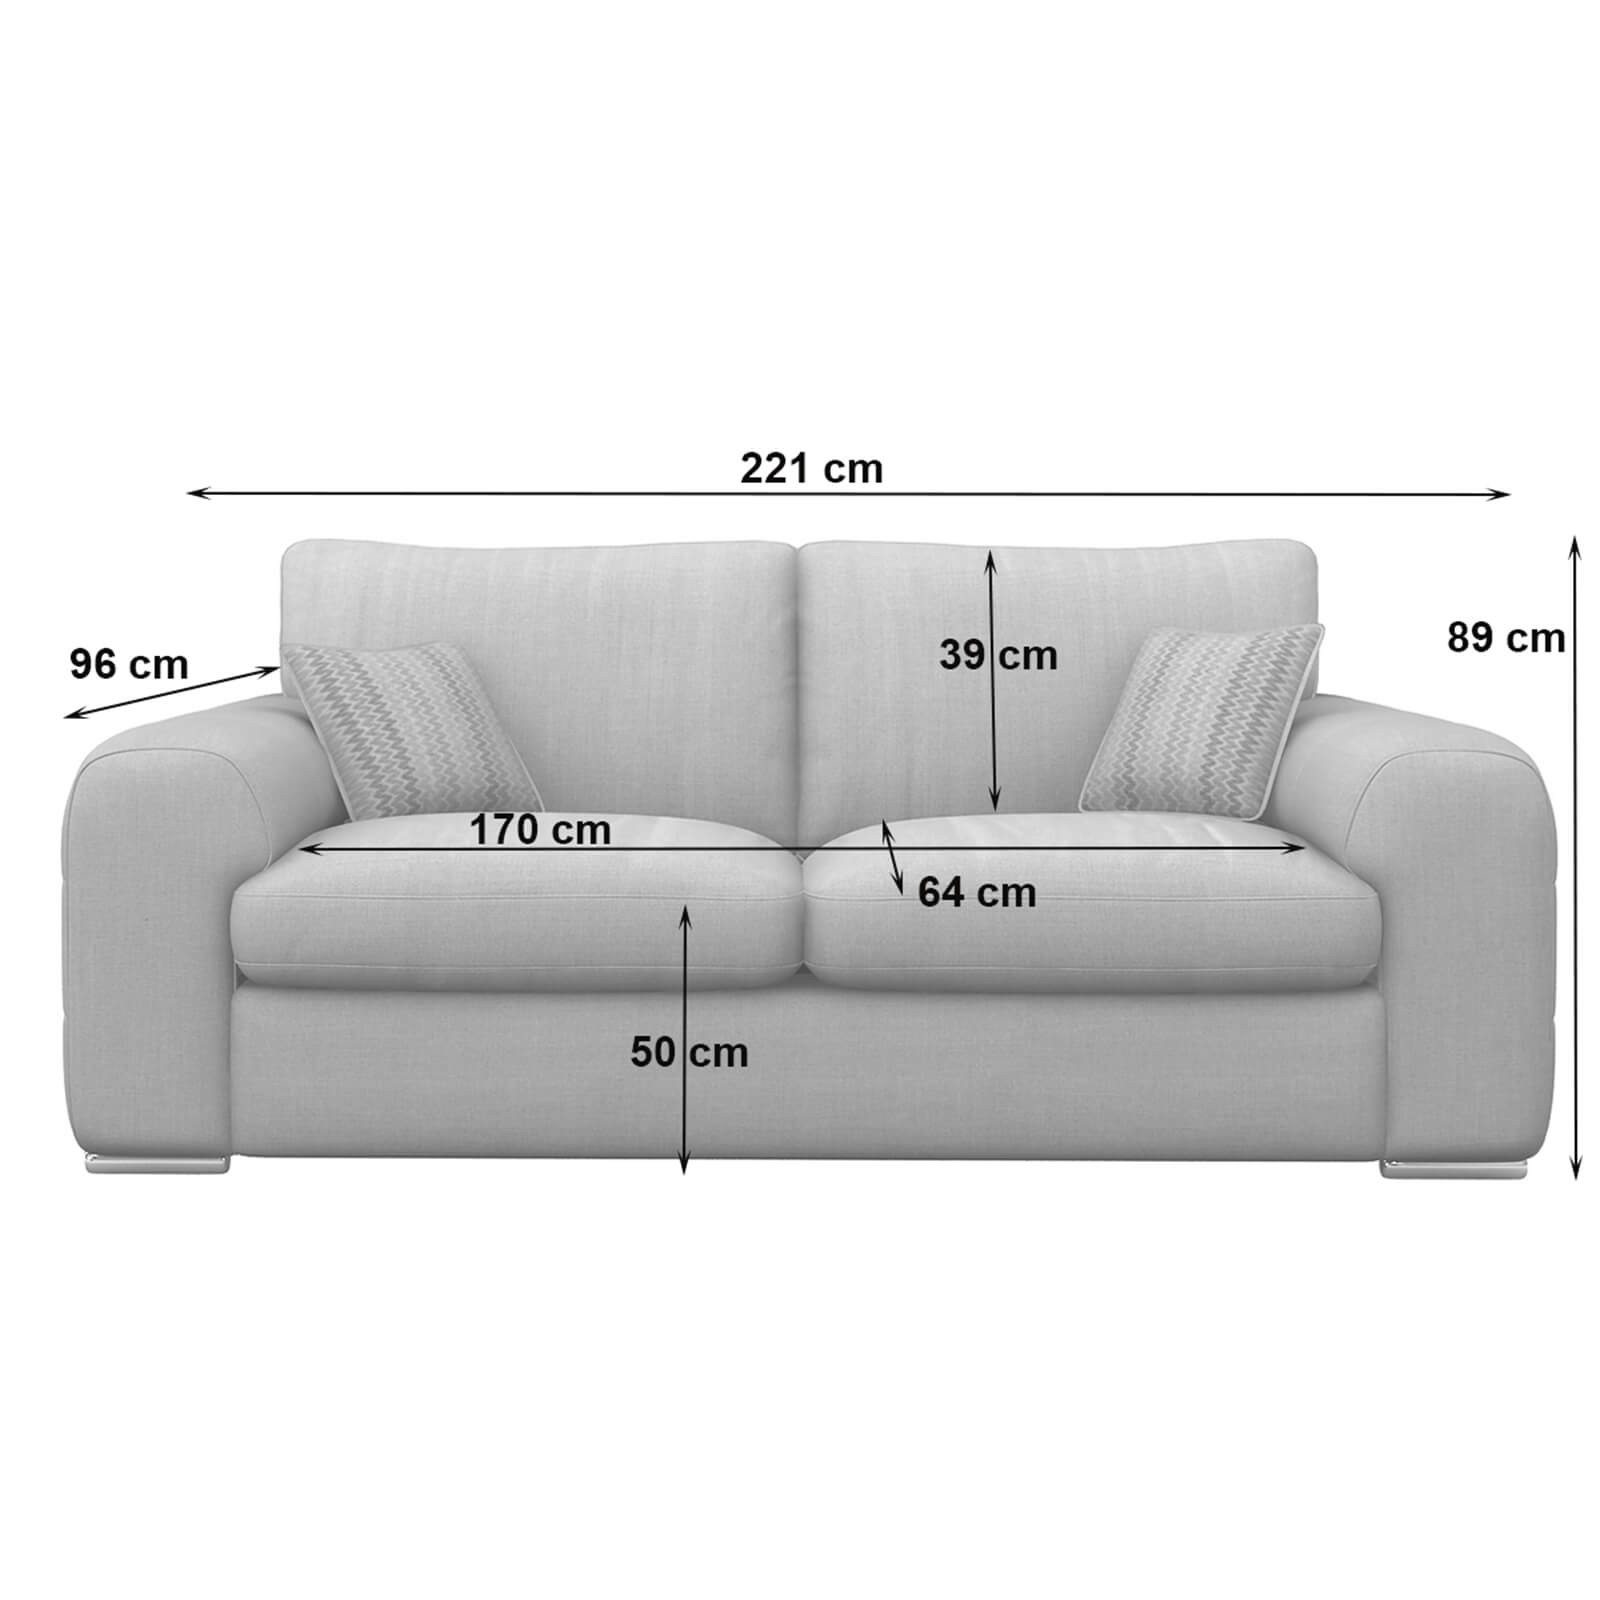 Amethyst 3 Seater Sofa - Brown